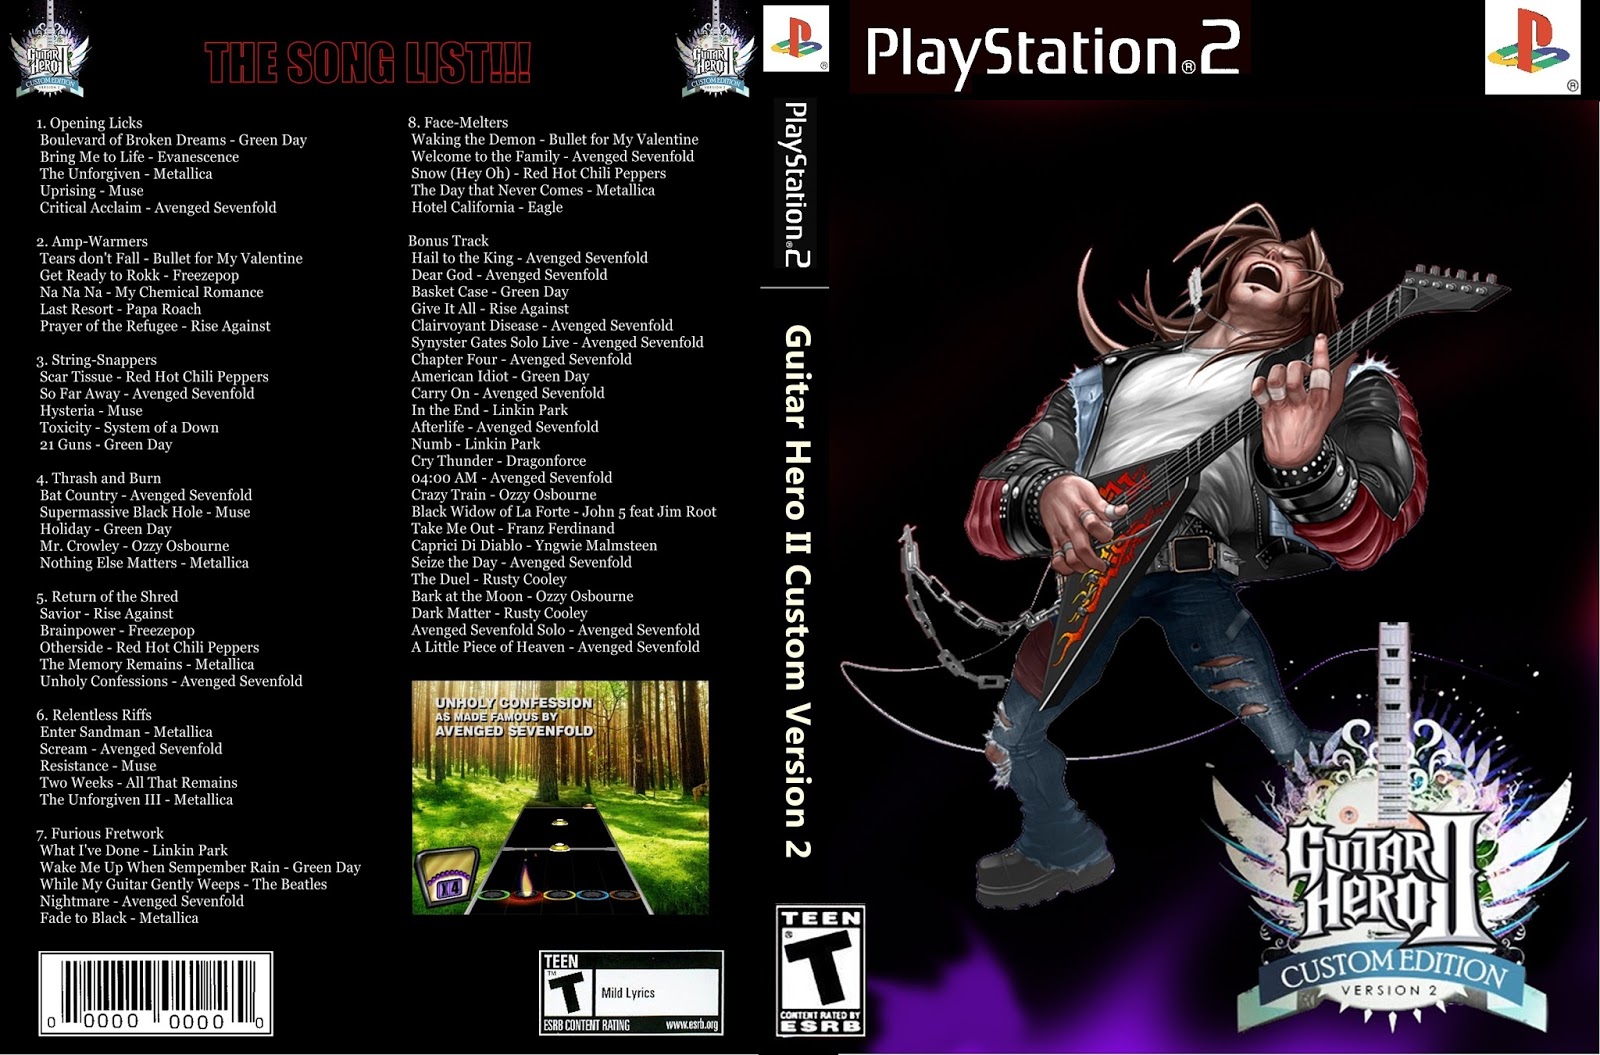 Mundo Guitar Hero Guitar Hero 2 Ii Custom Edition Version 2 Ps2 Iso Download